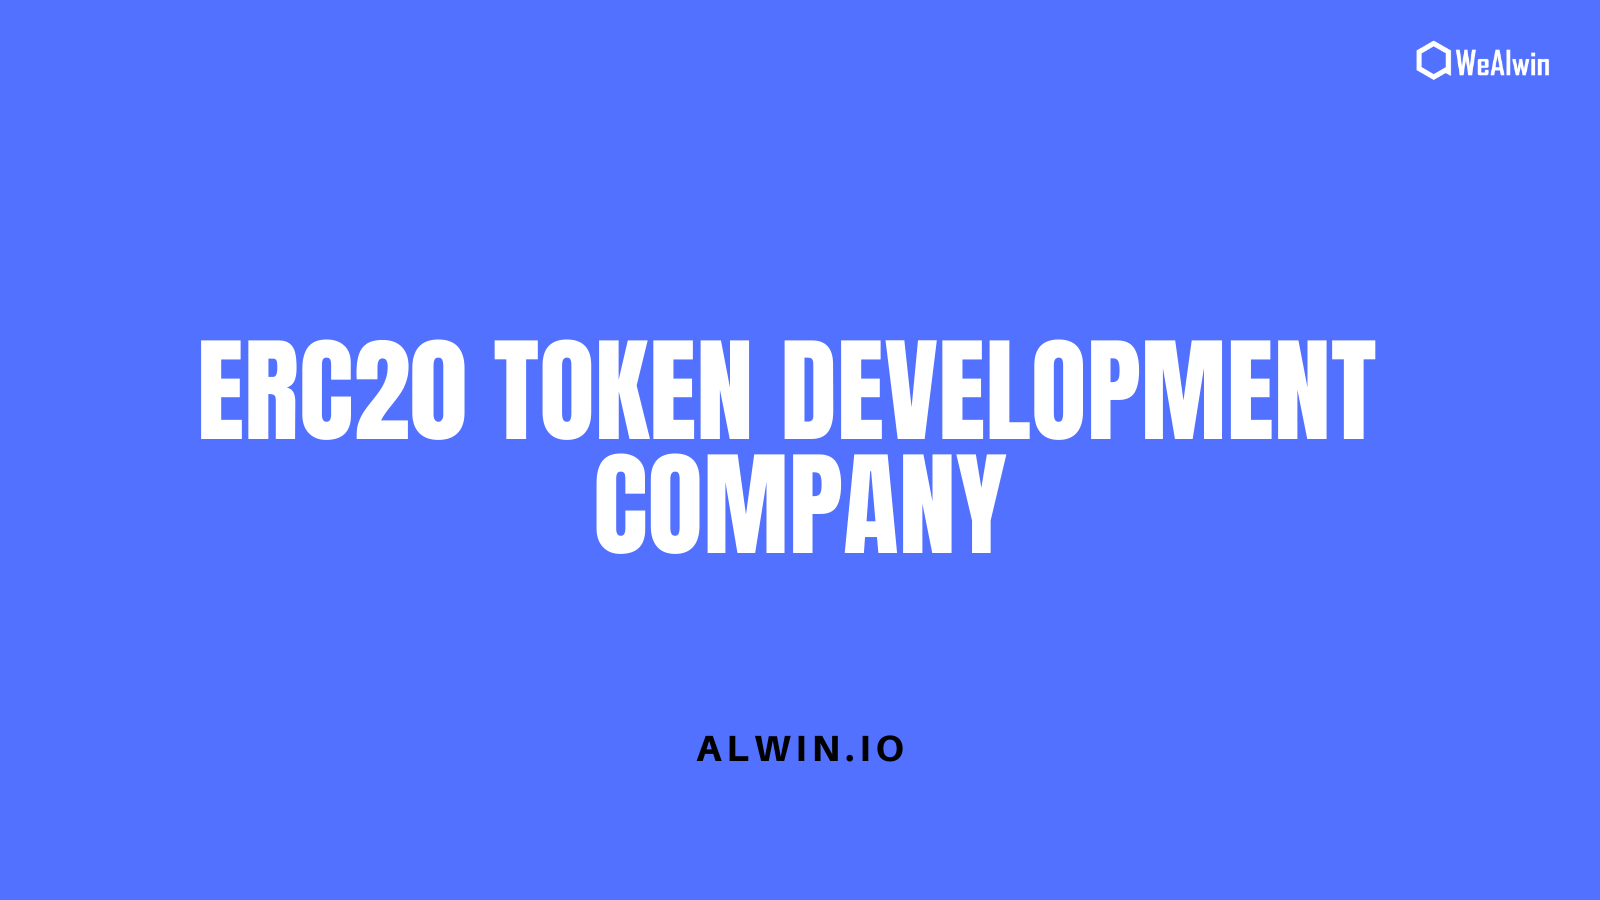 Article about ERC20 Token Development Company